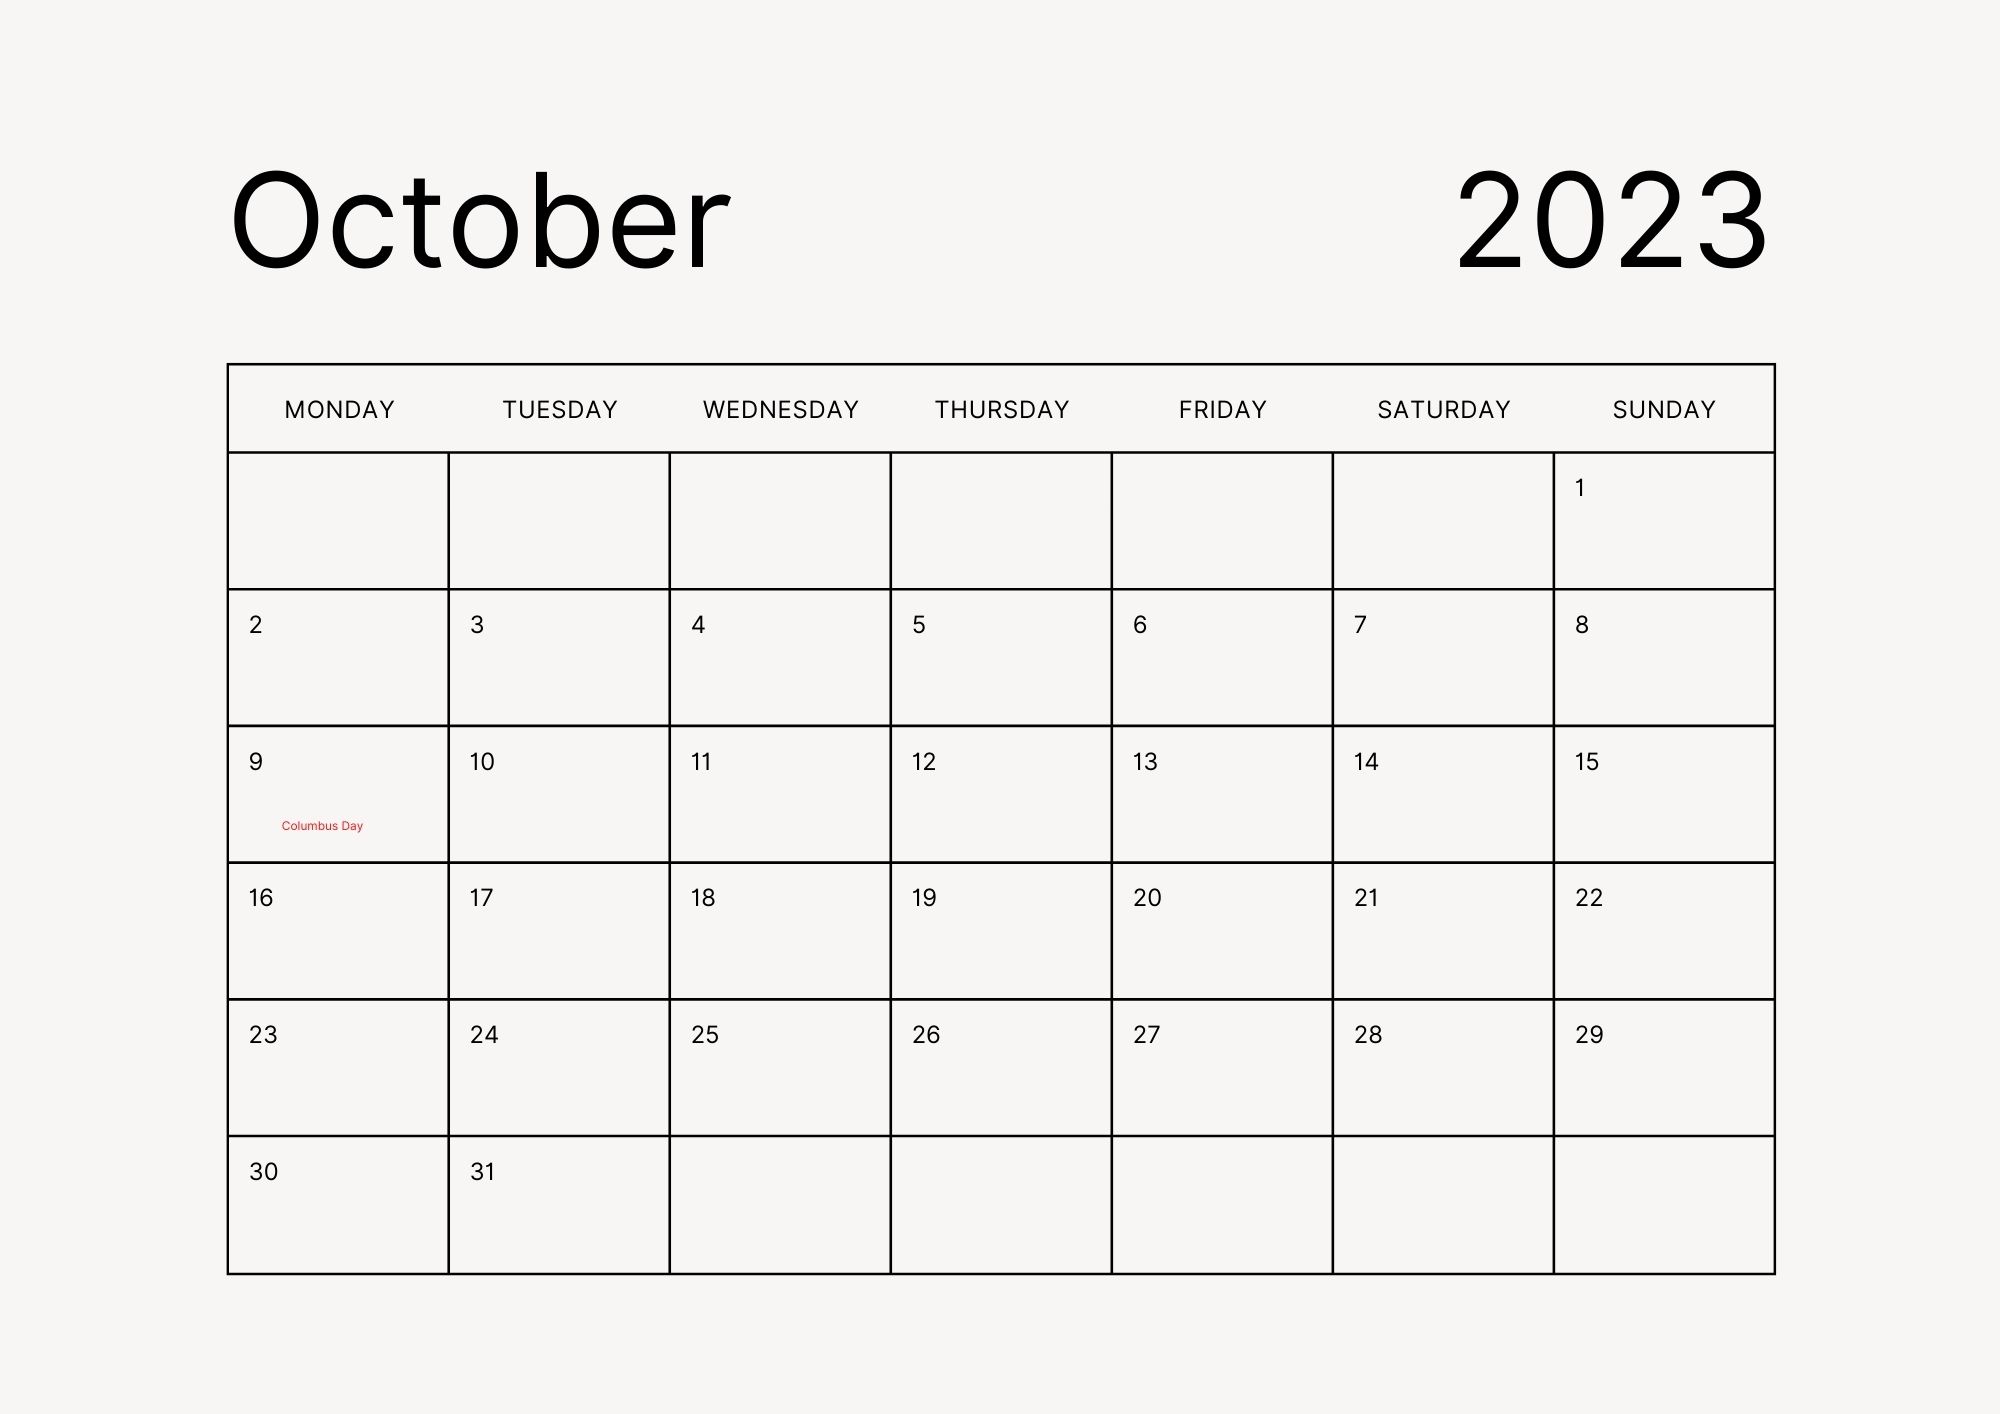 October Calendar 2023 With Holidays